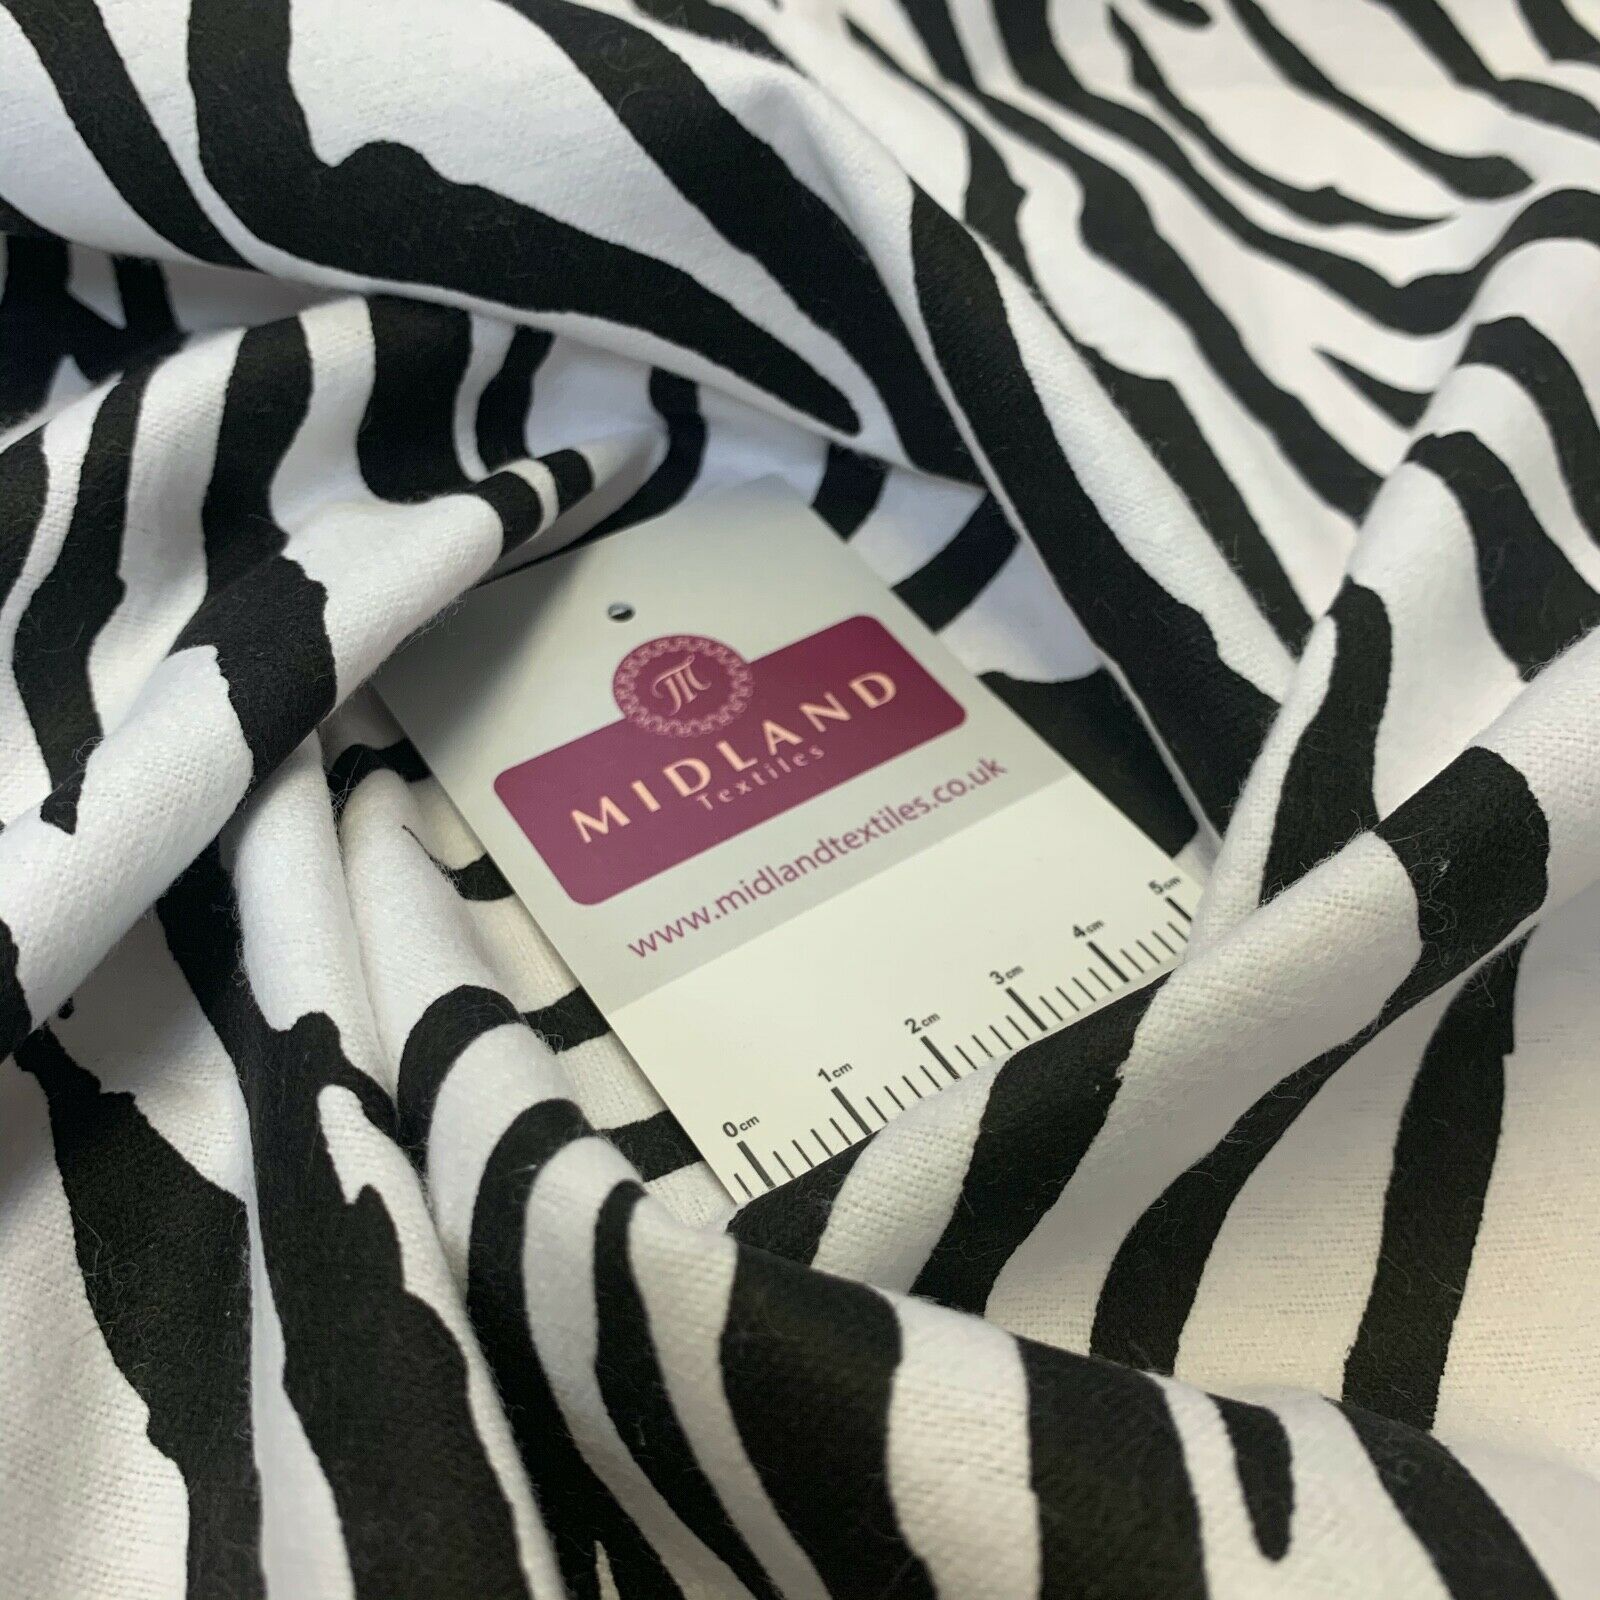 Black white zebra Cotton Wynciette Soft Brushed Fabric 110 cm Wide MK1227-9